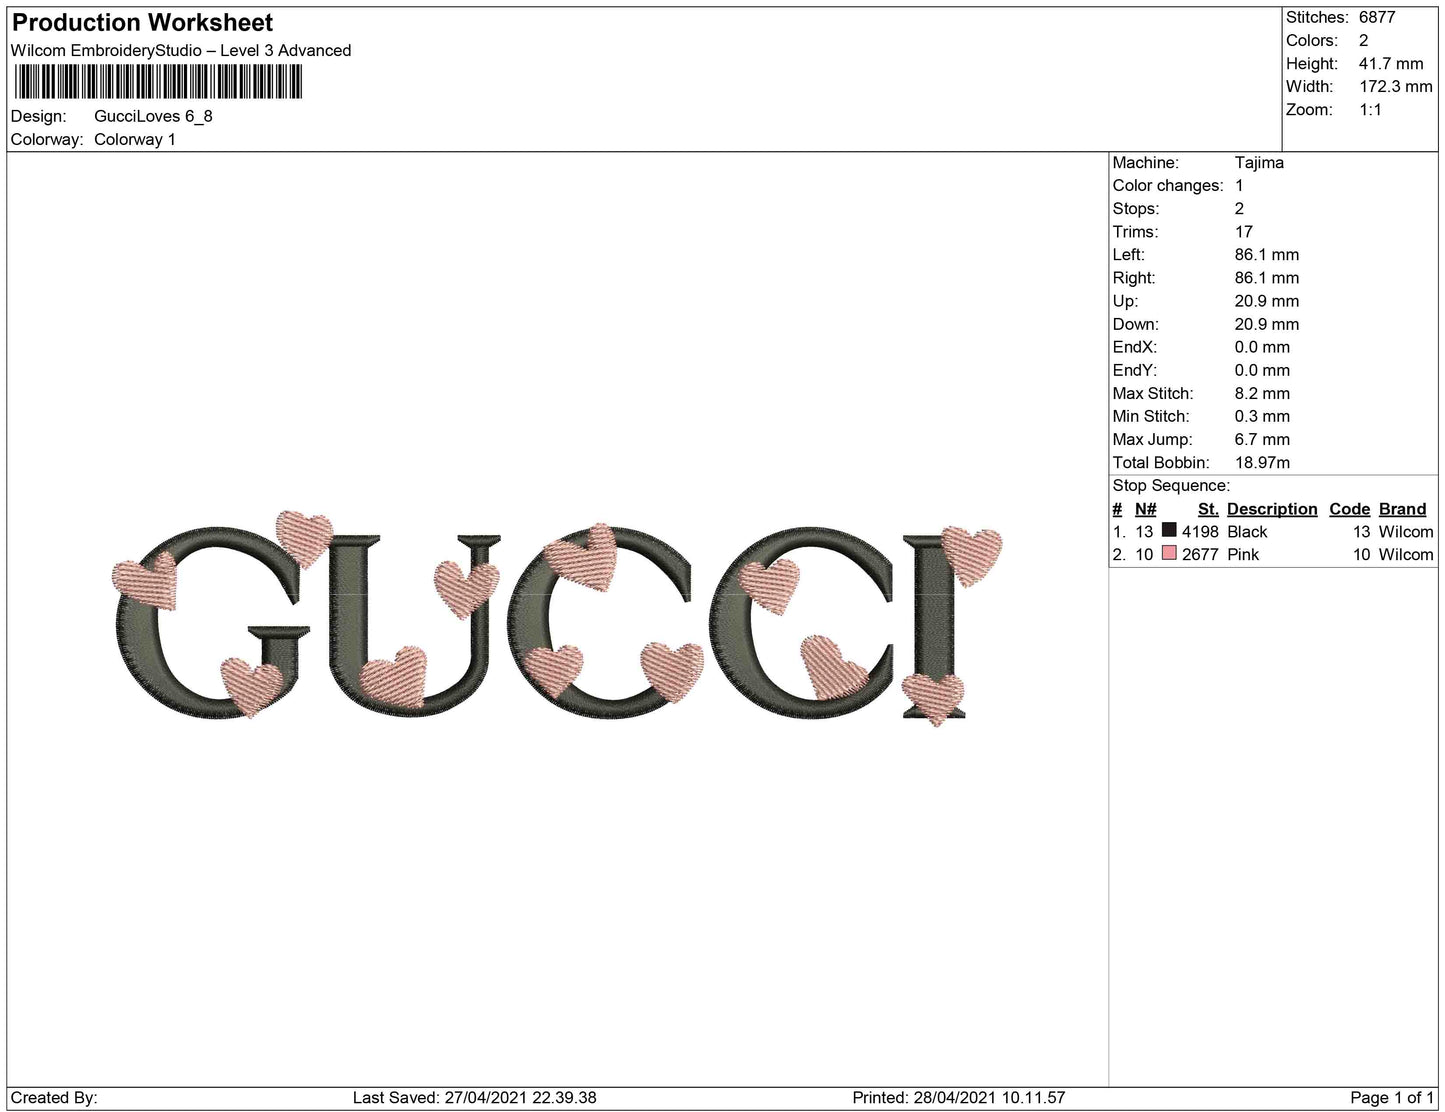 Gucci Loves